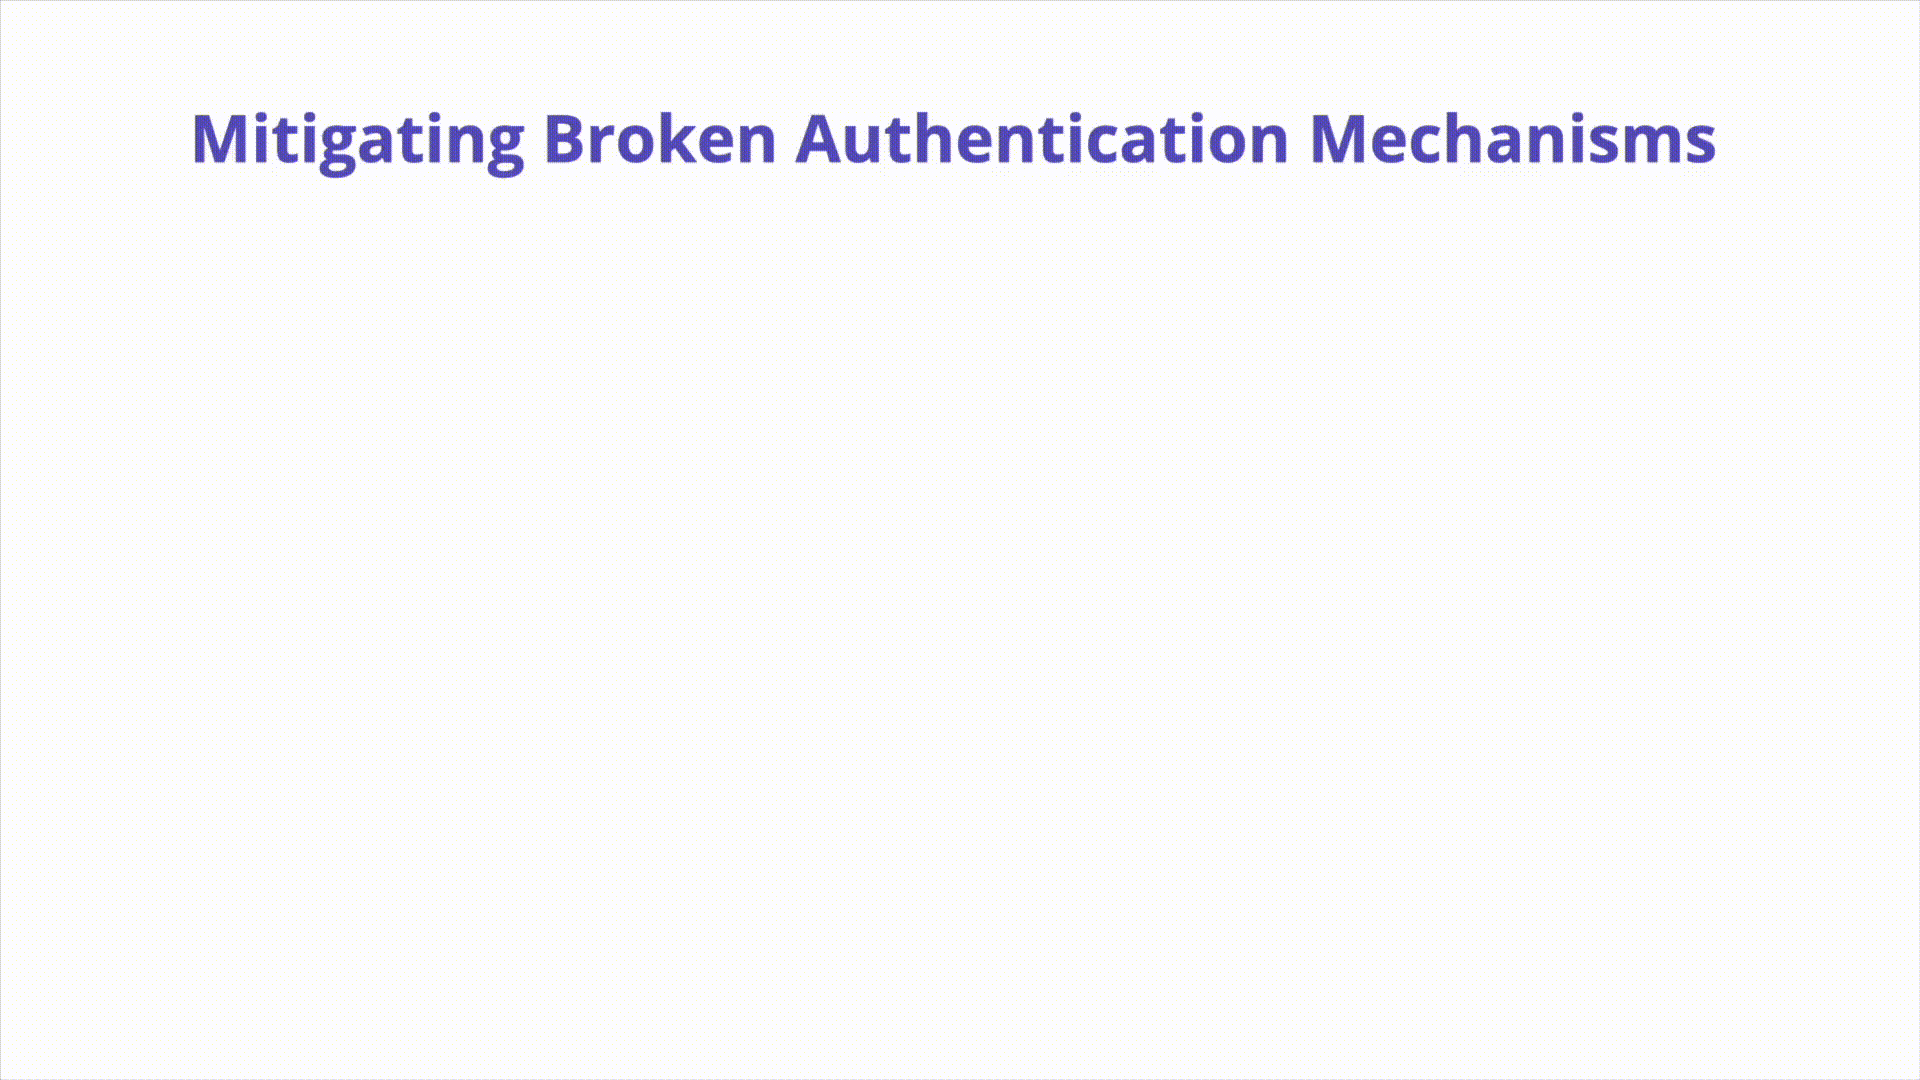 Broken Authentication -
Mitigations